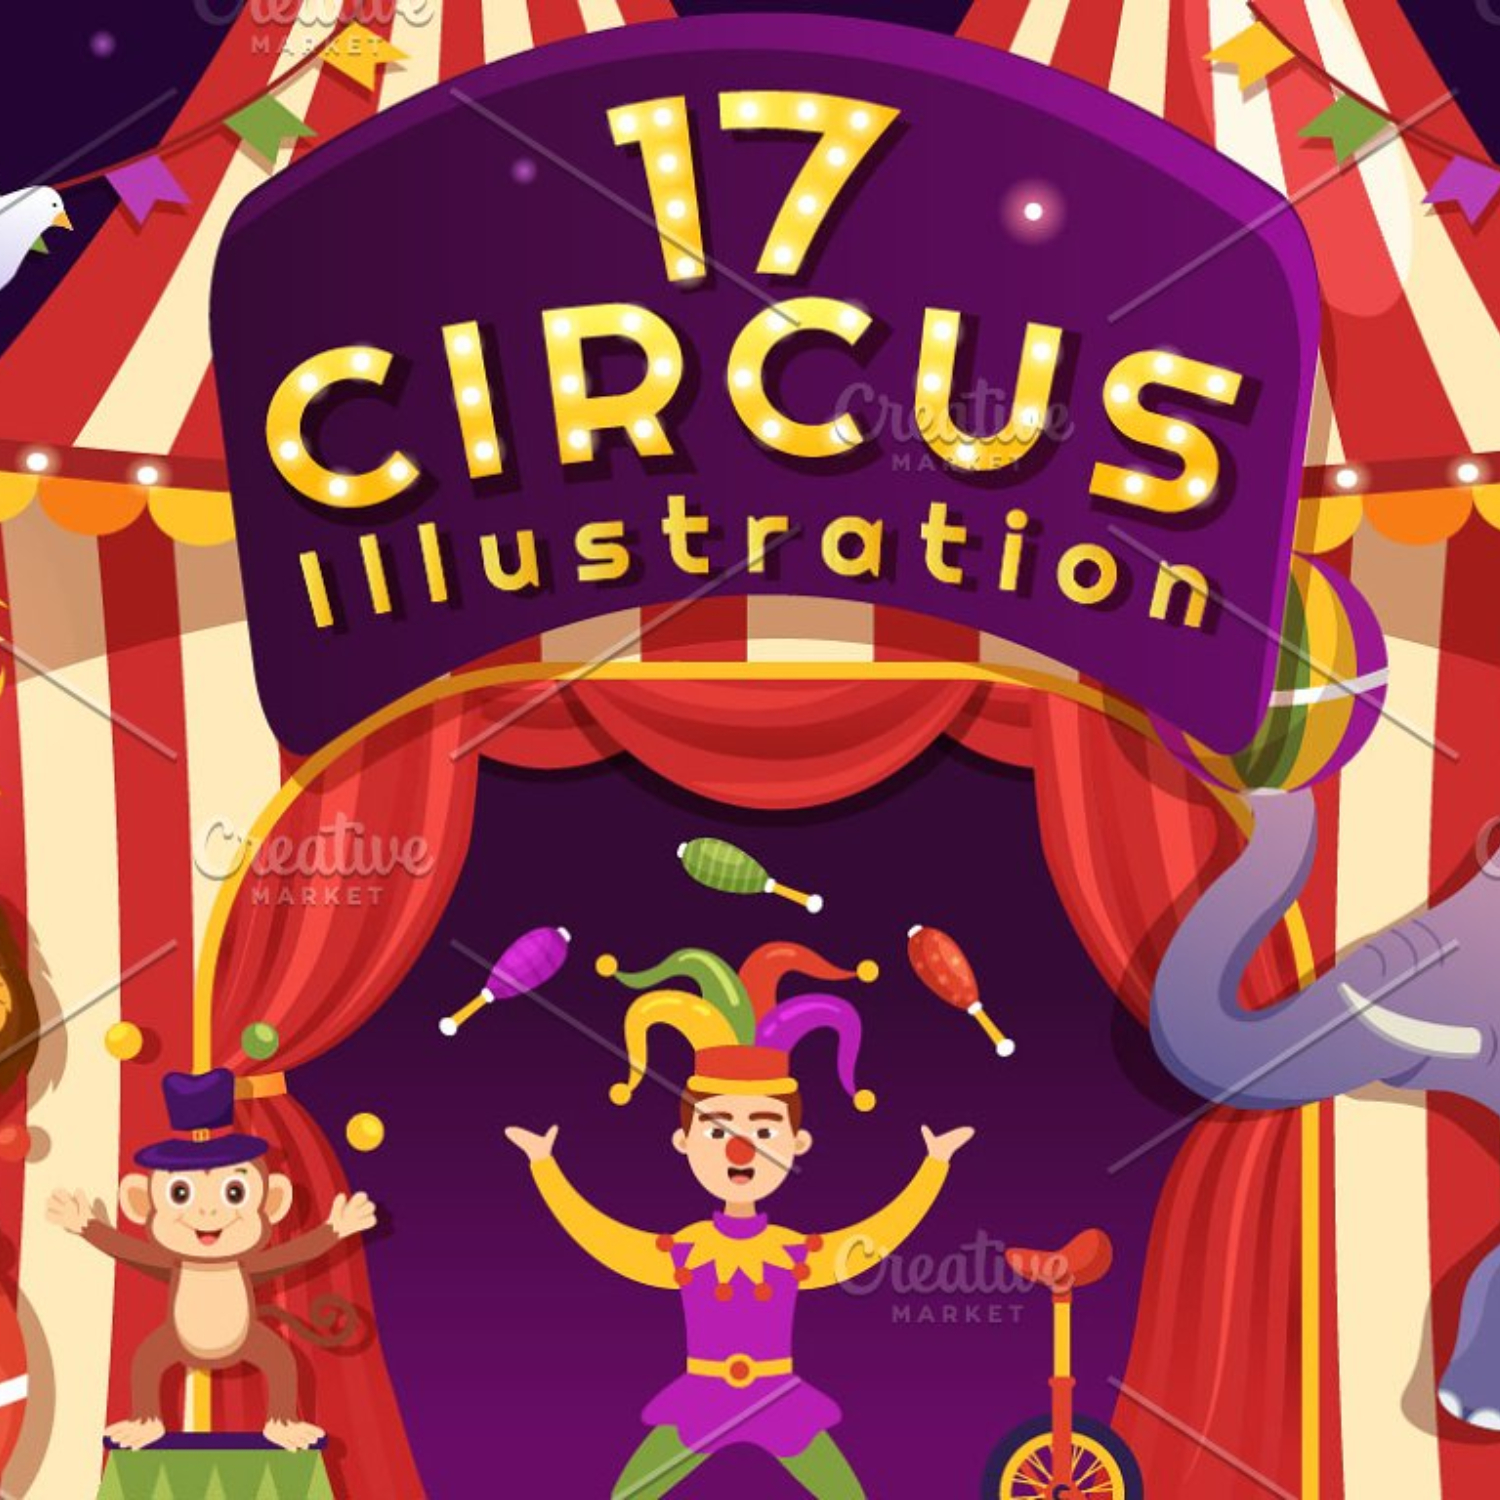 17 Circus Show Illustration.